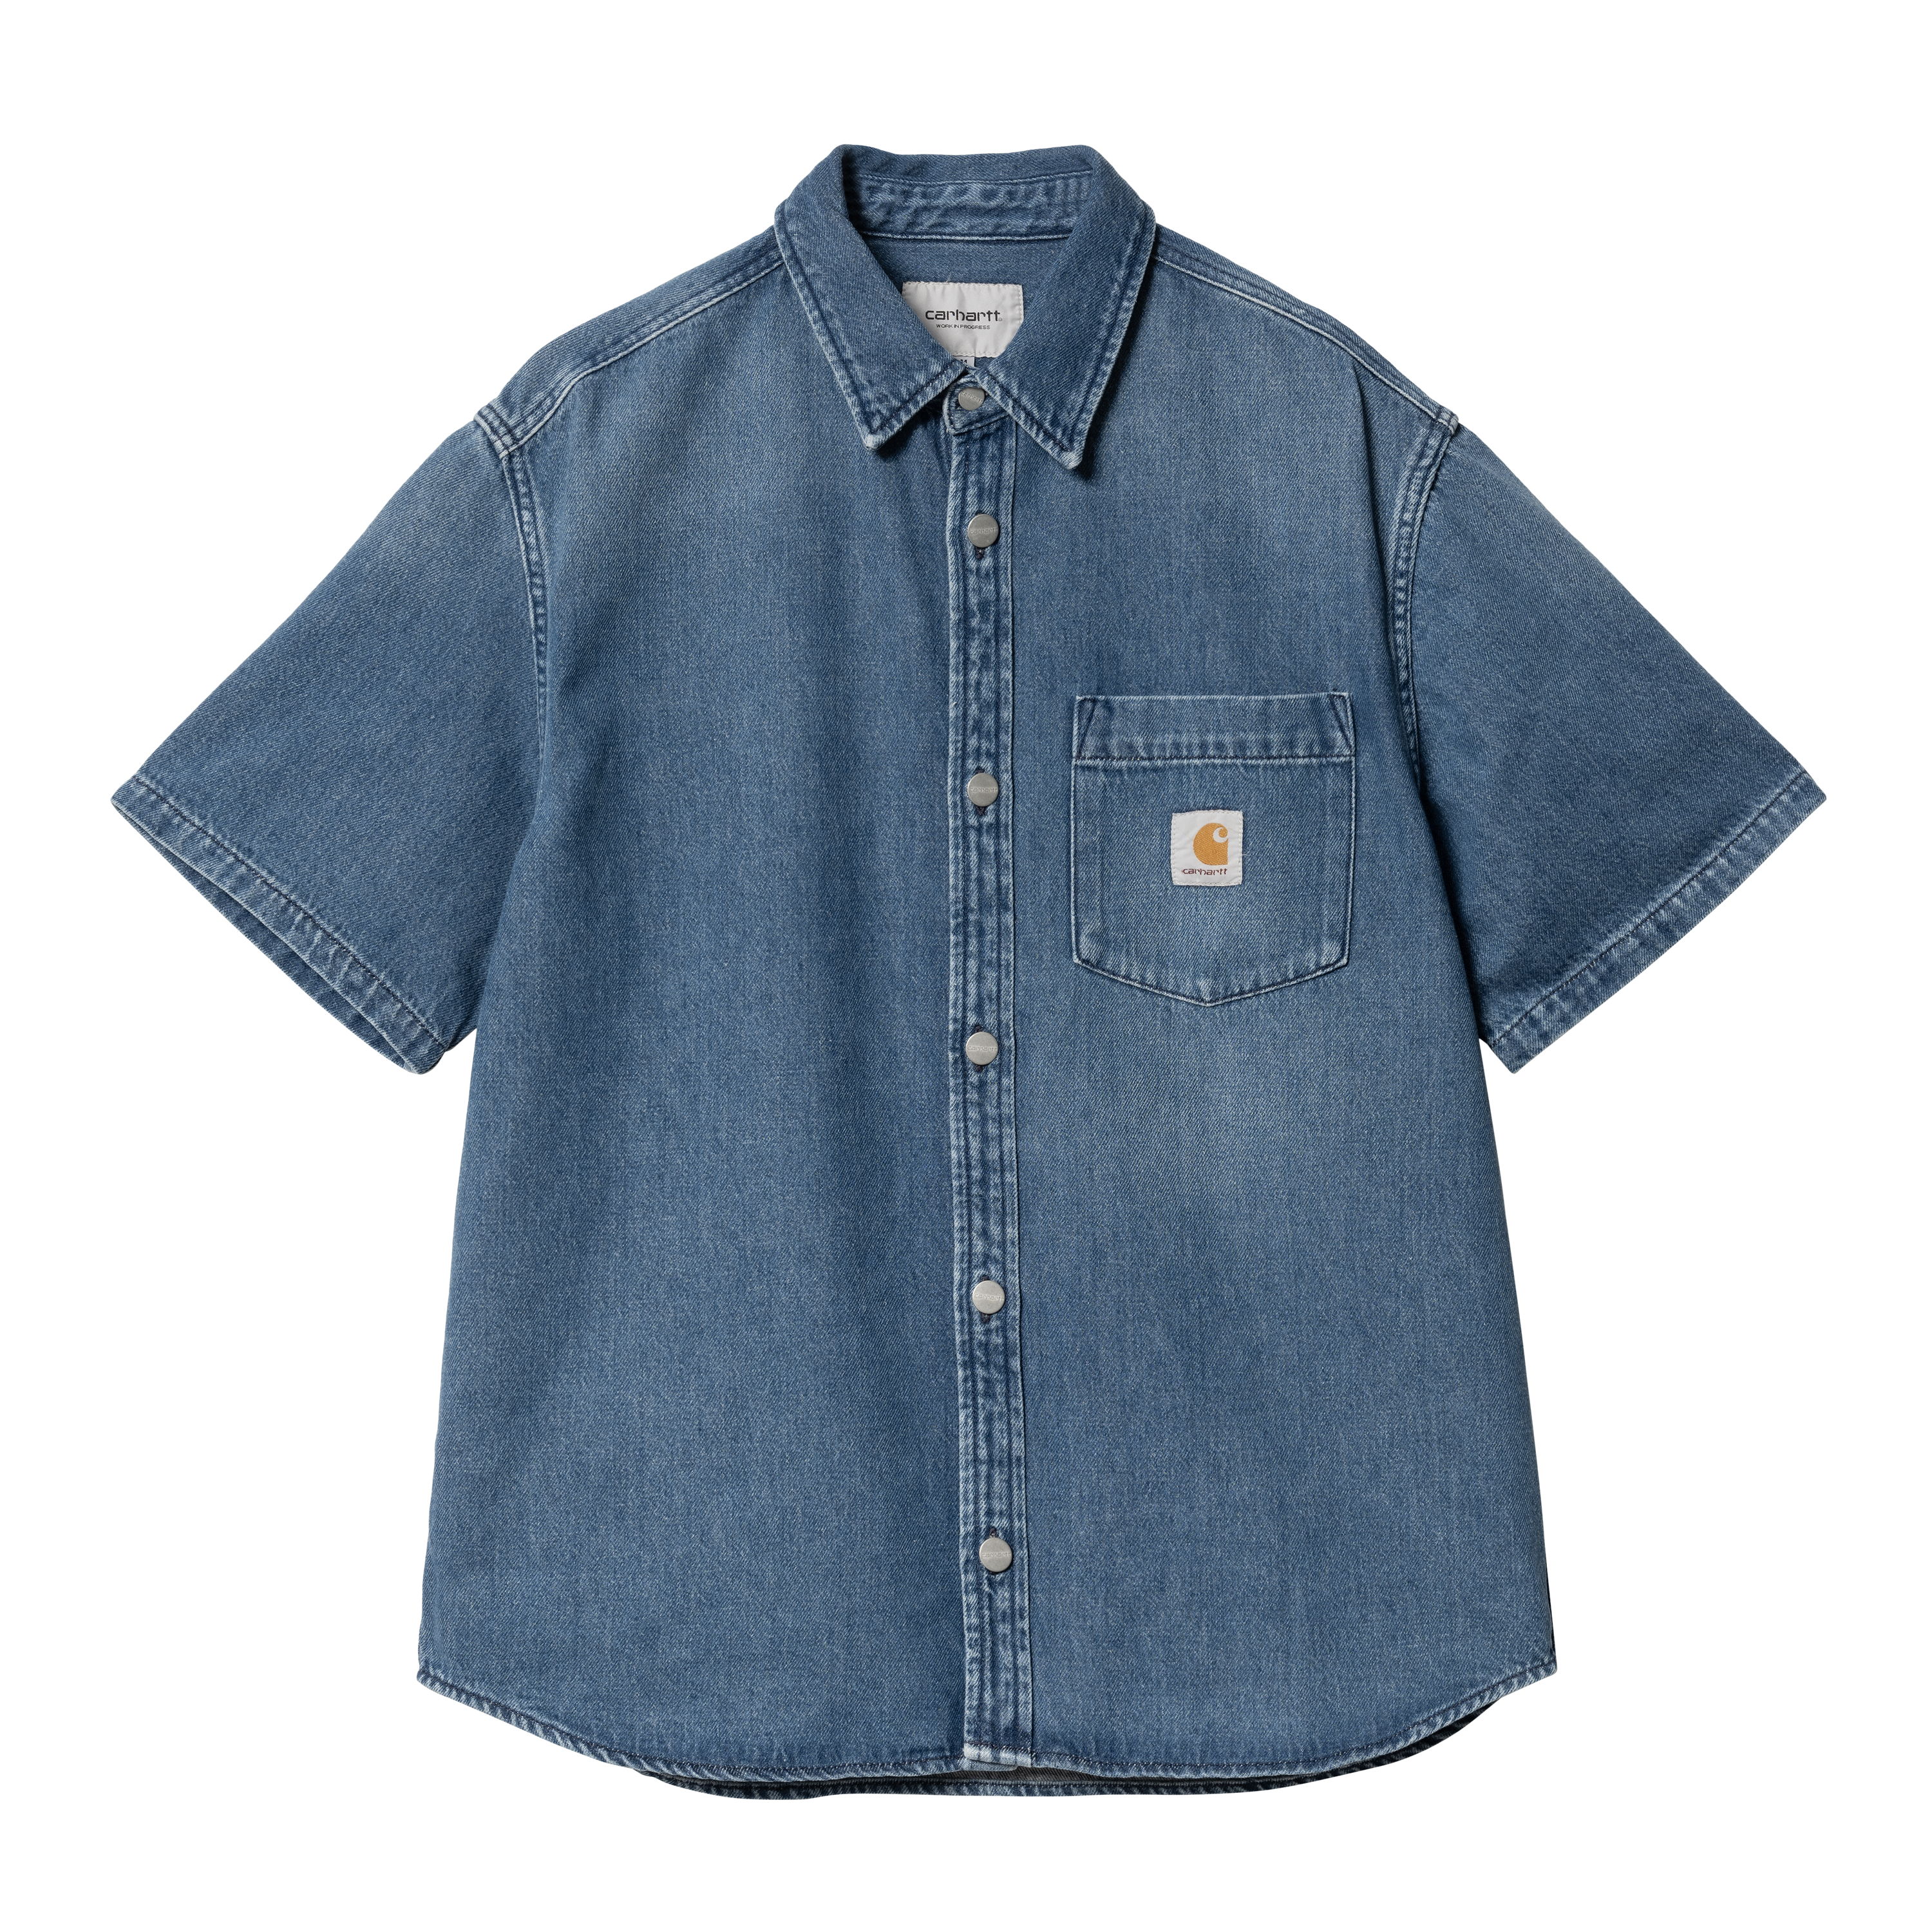 Carhartt WIP Short Sleeve Ody Shirt in Blau